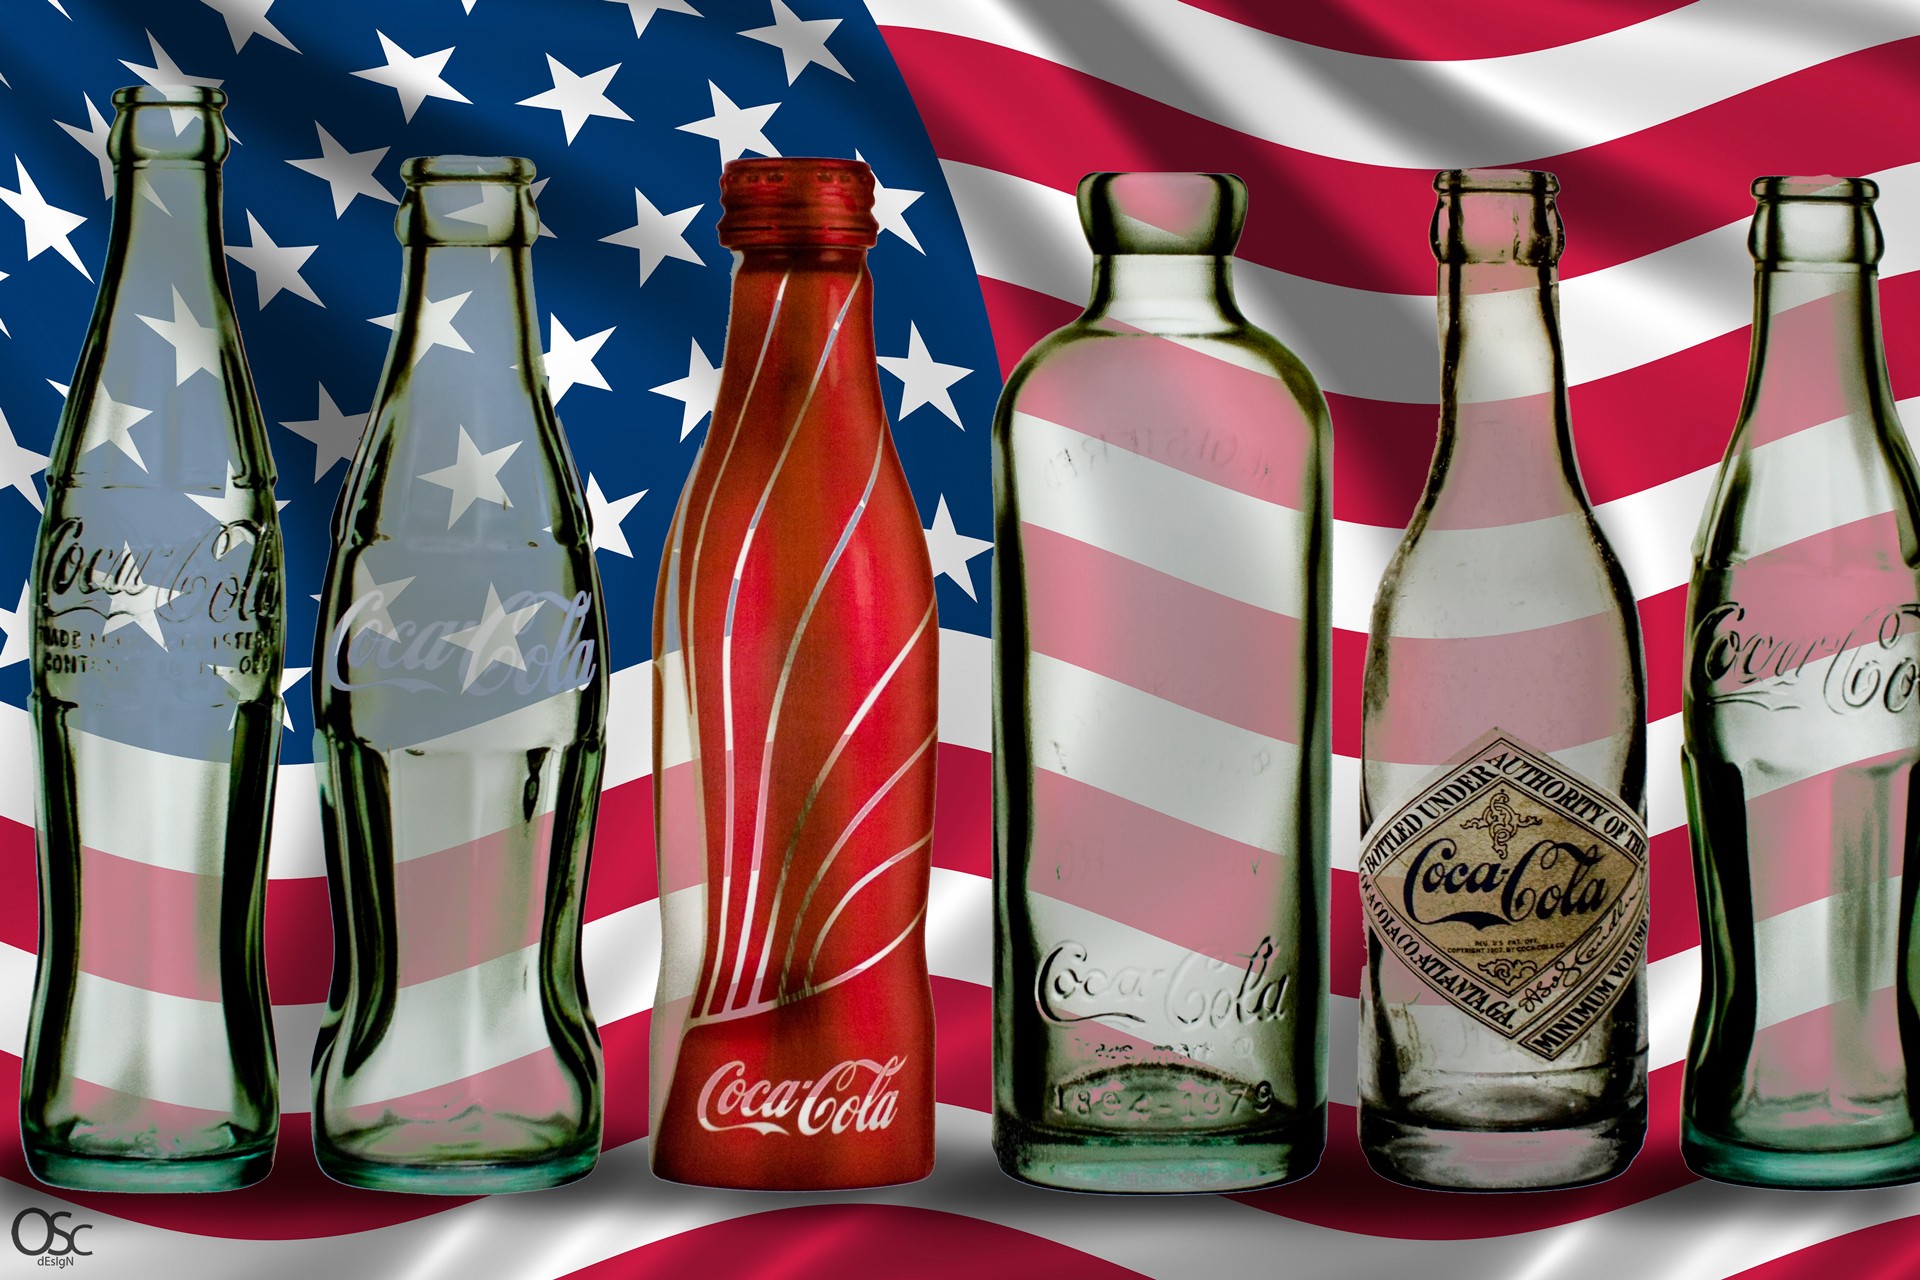 General 1920x1280 Coca-Cola flag bottles USA American flag brand